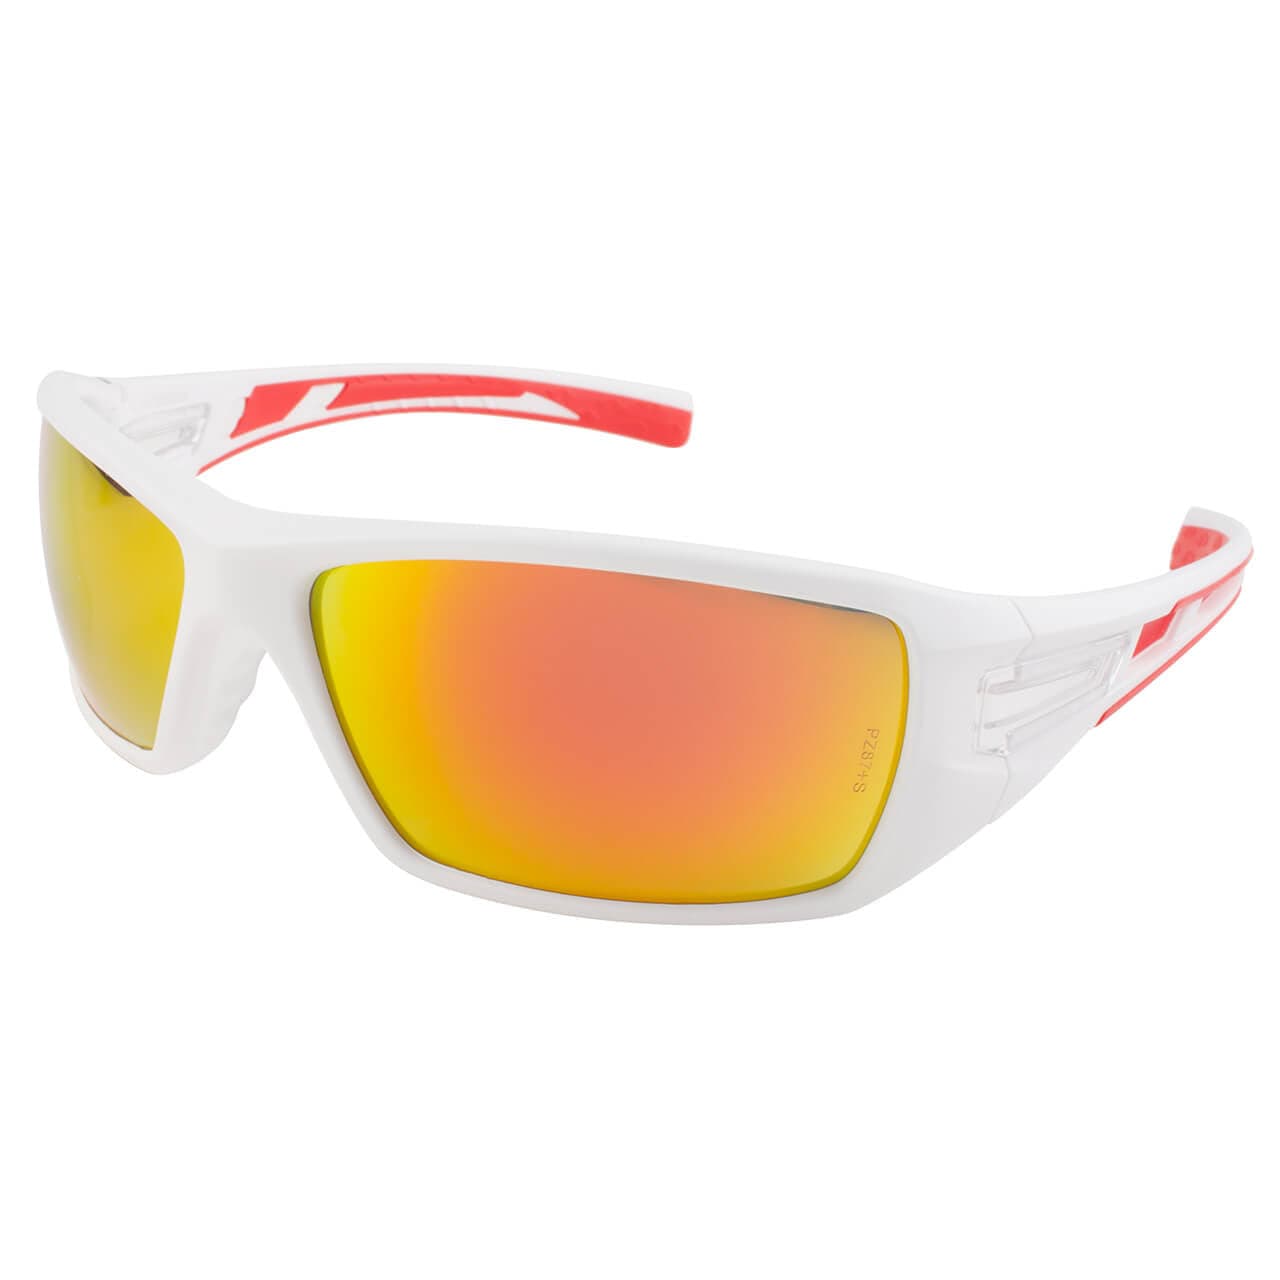 Metel M30 Safety Sunglasses Lightweight Full-Frame, Flexible Temples, Multiple Color Options - White Frame w/Red Mirror Lens